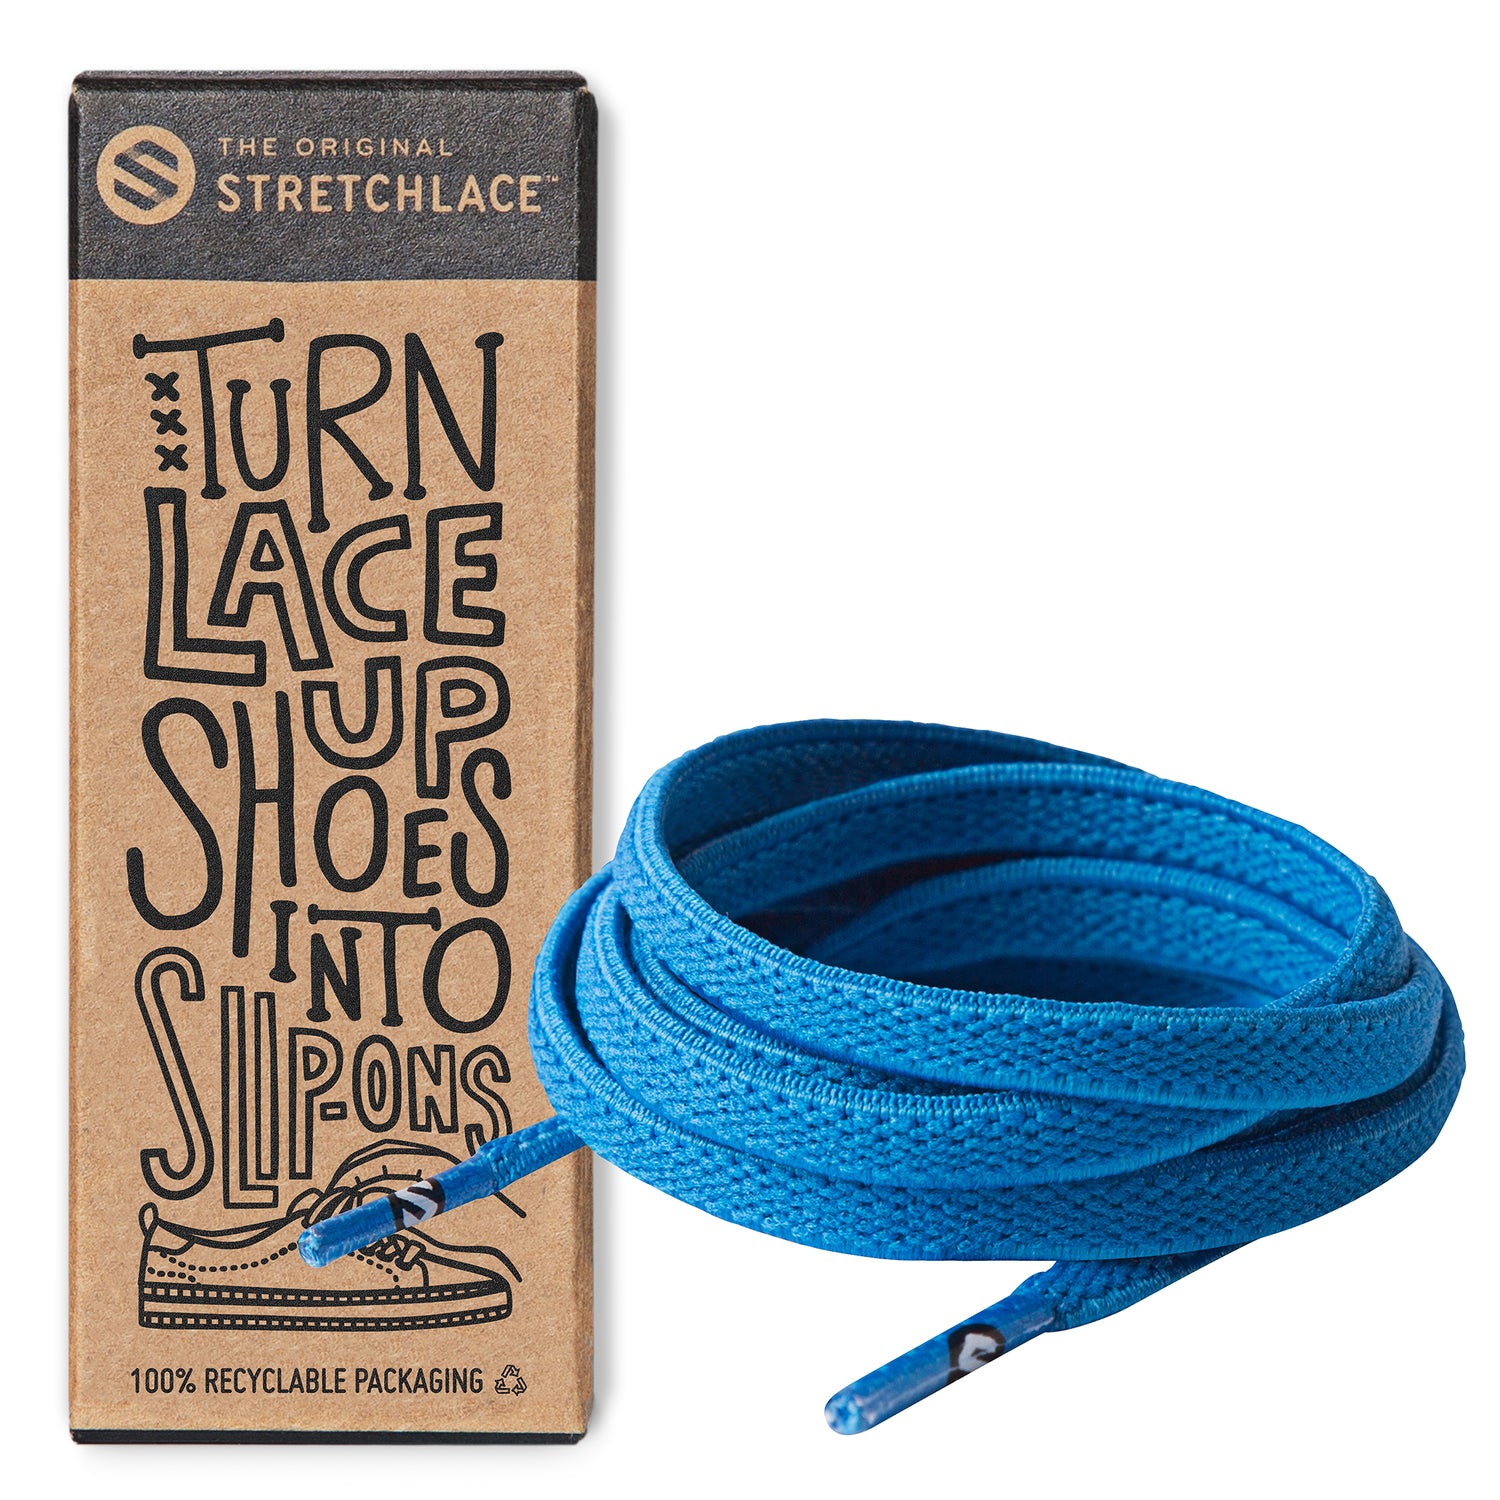 Blue Shoelaces, Black Rope Shoelaces